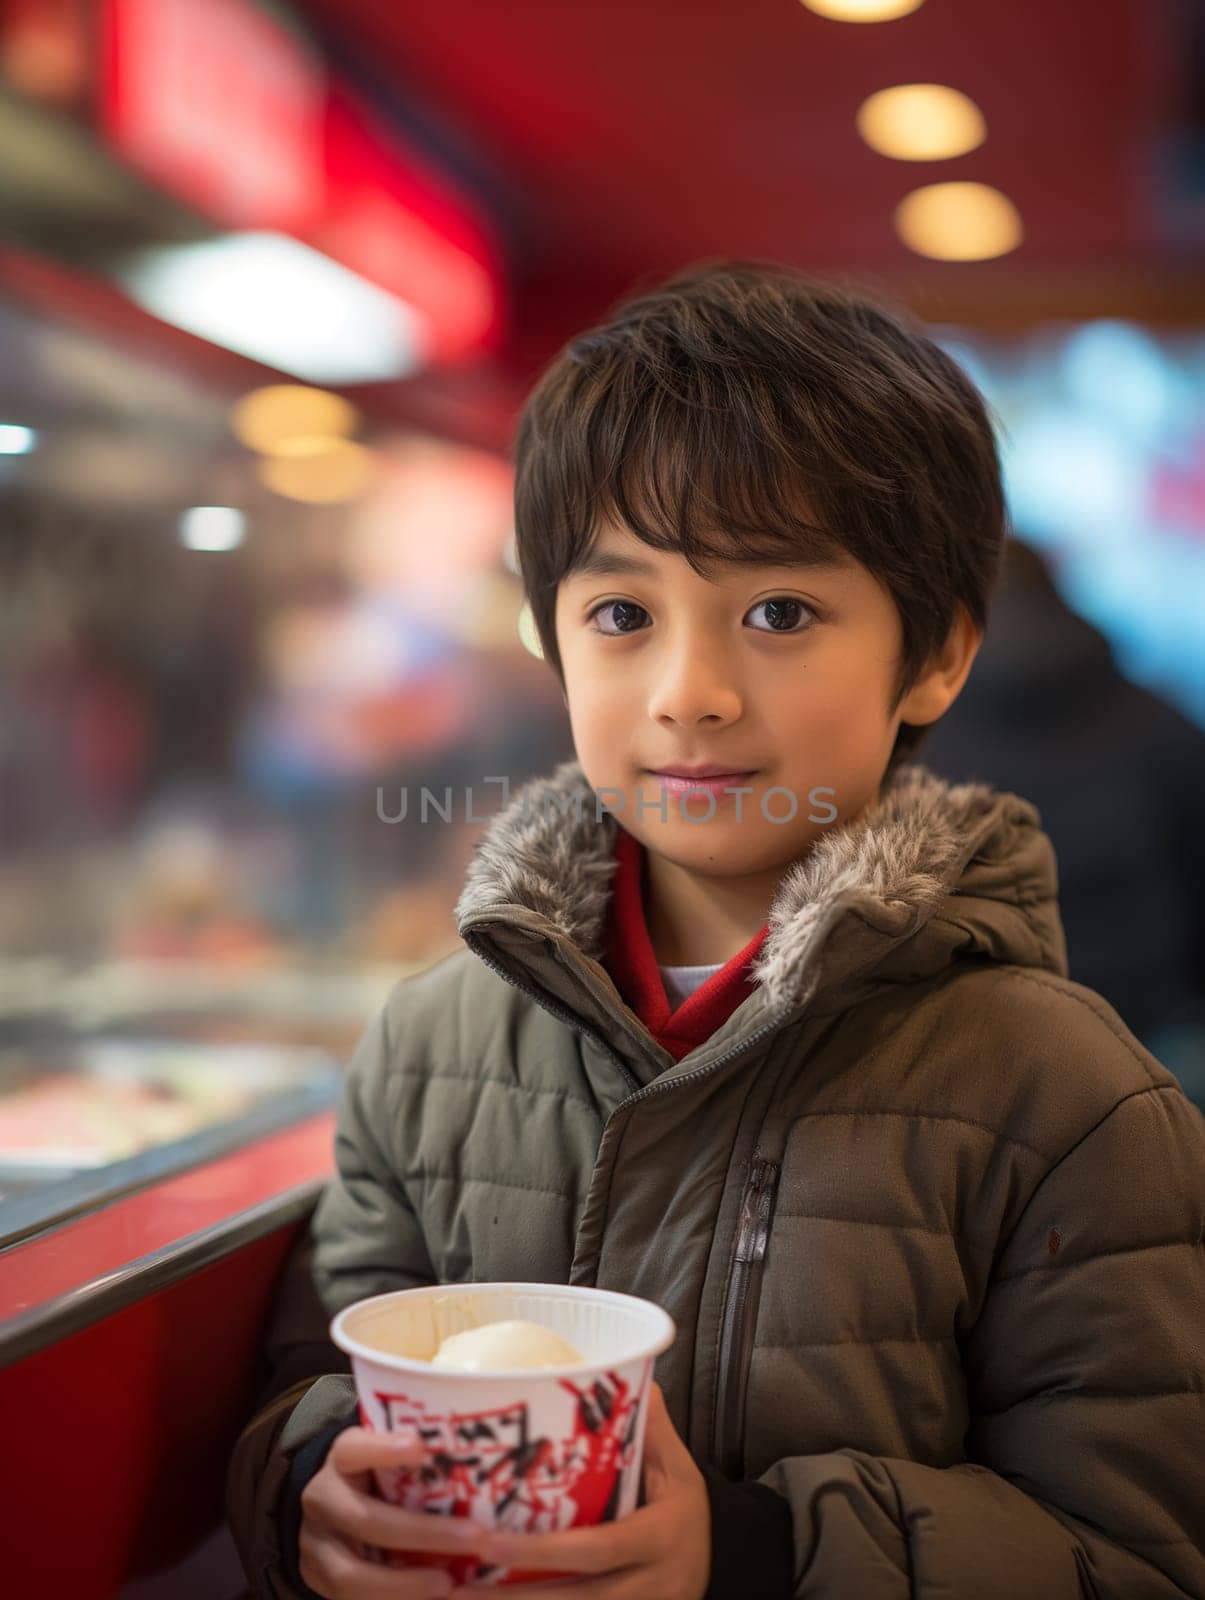 A joyful child smiles beside a large soft serve ice cream. by Hype2art